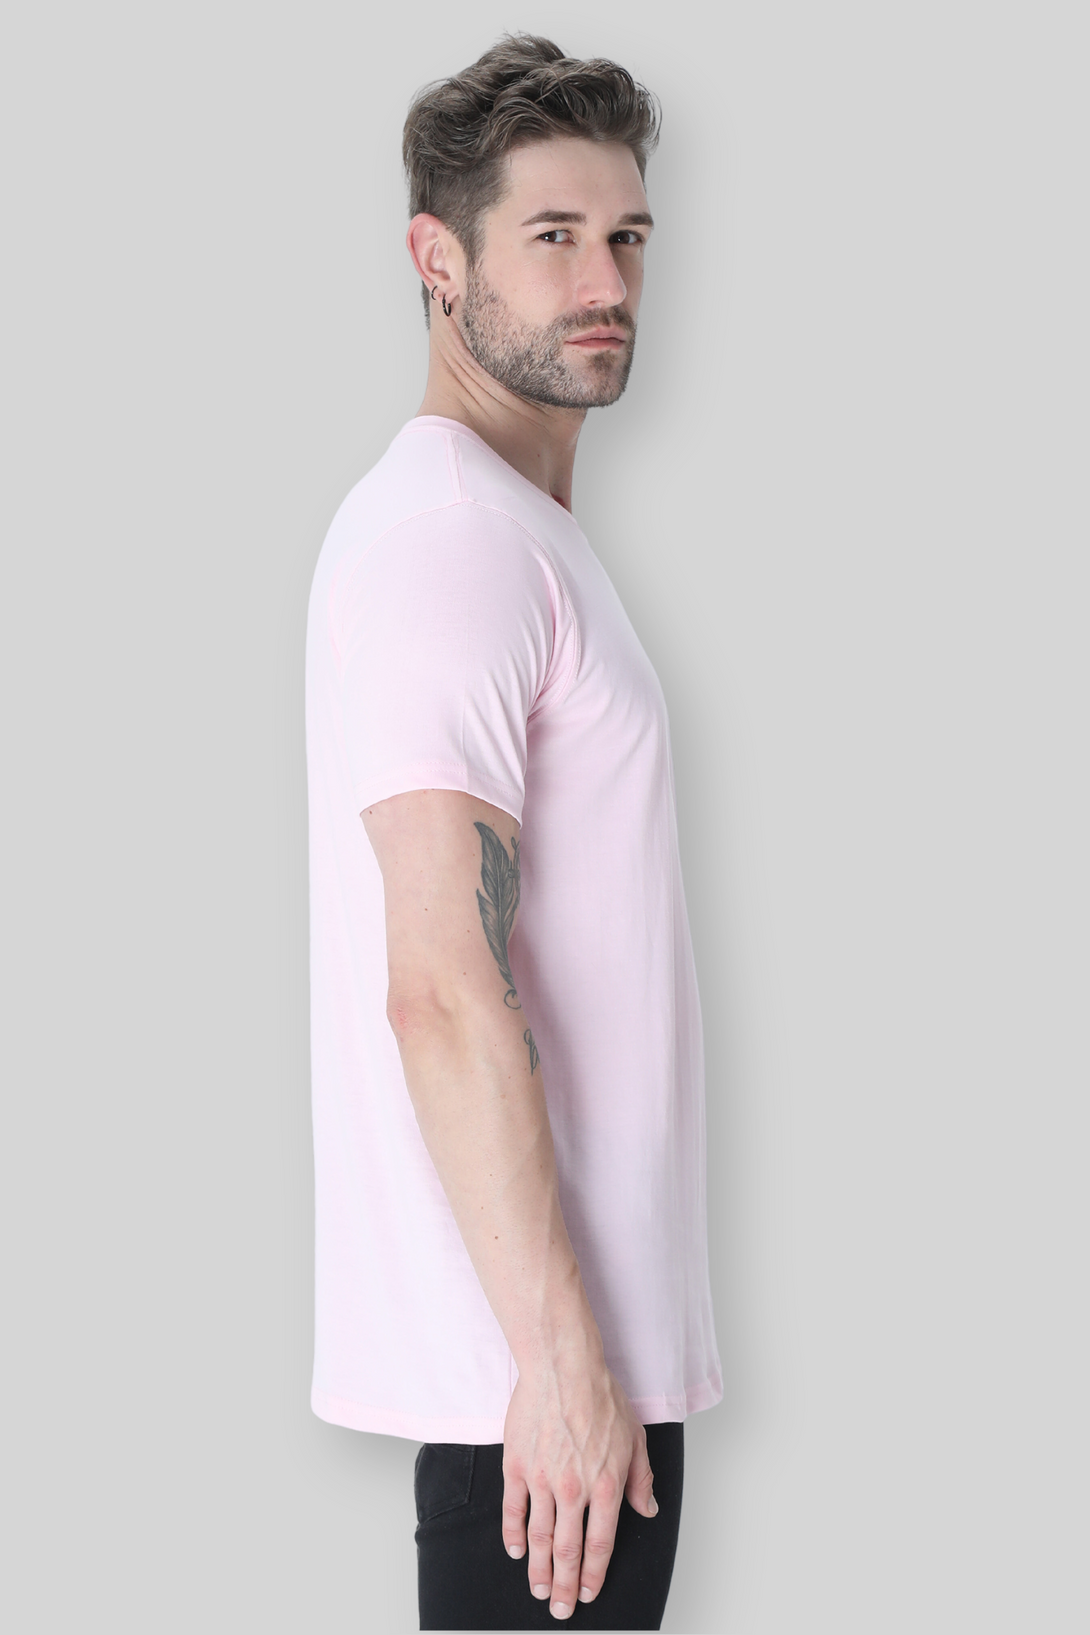 Light Baby Pink T Shirt For Men - WowWaves - 1